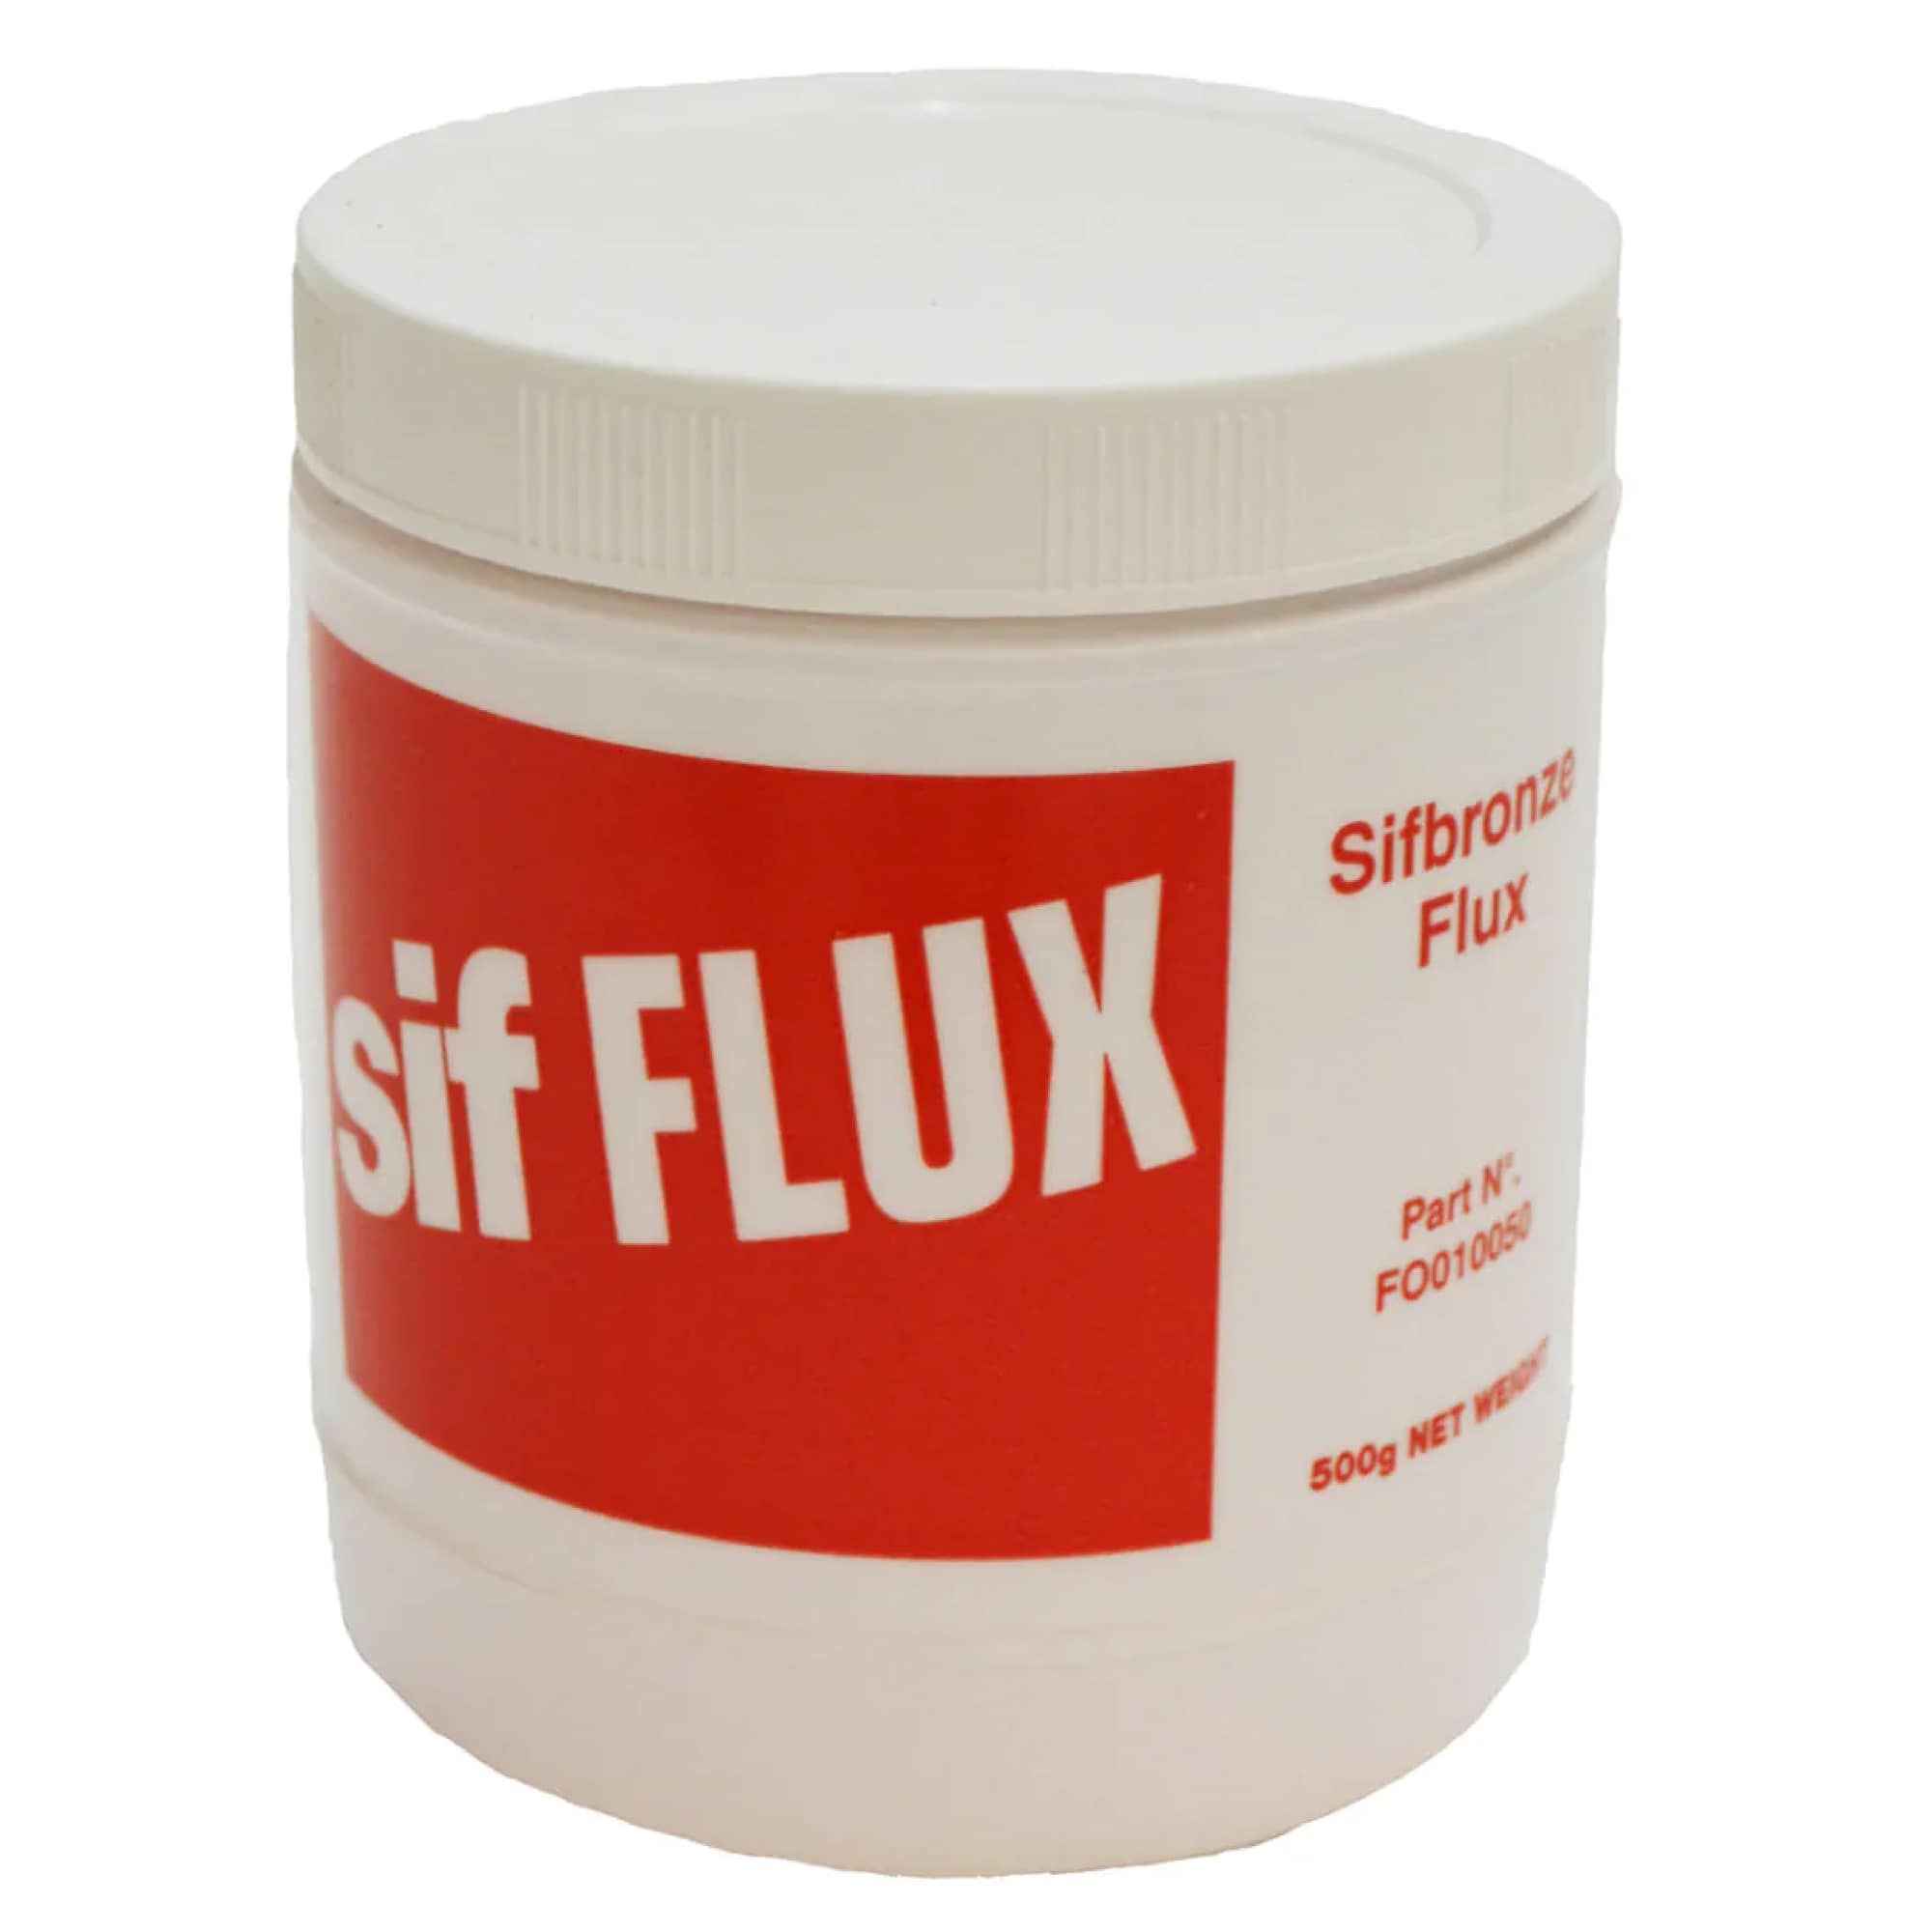 SifFlux Sifbronze Flux Powder 500g